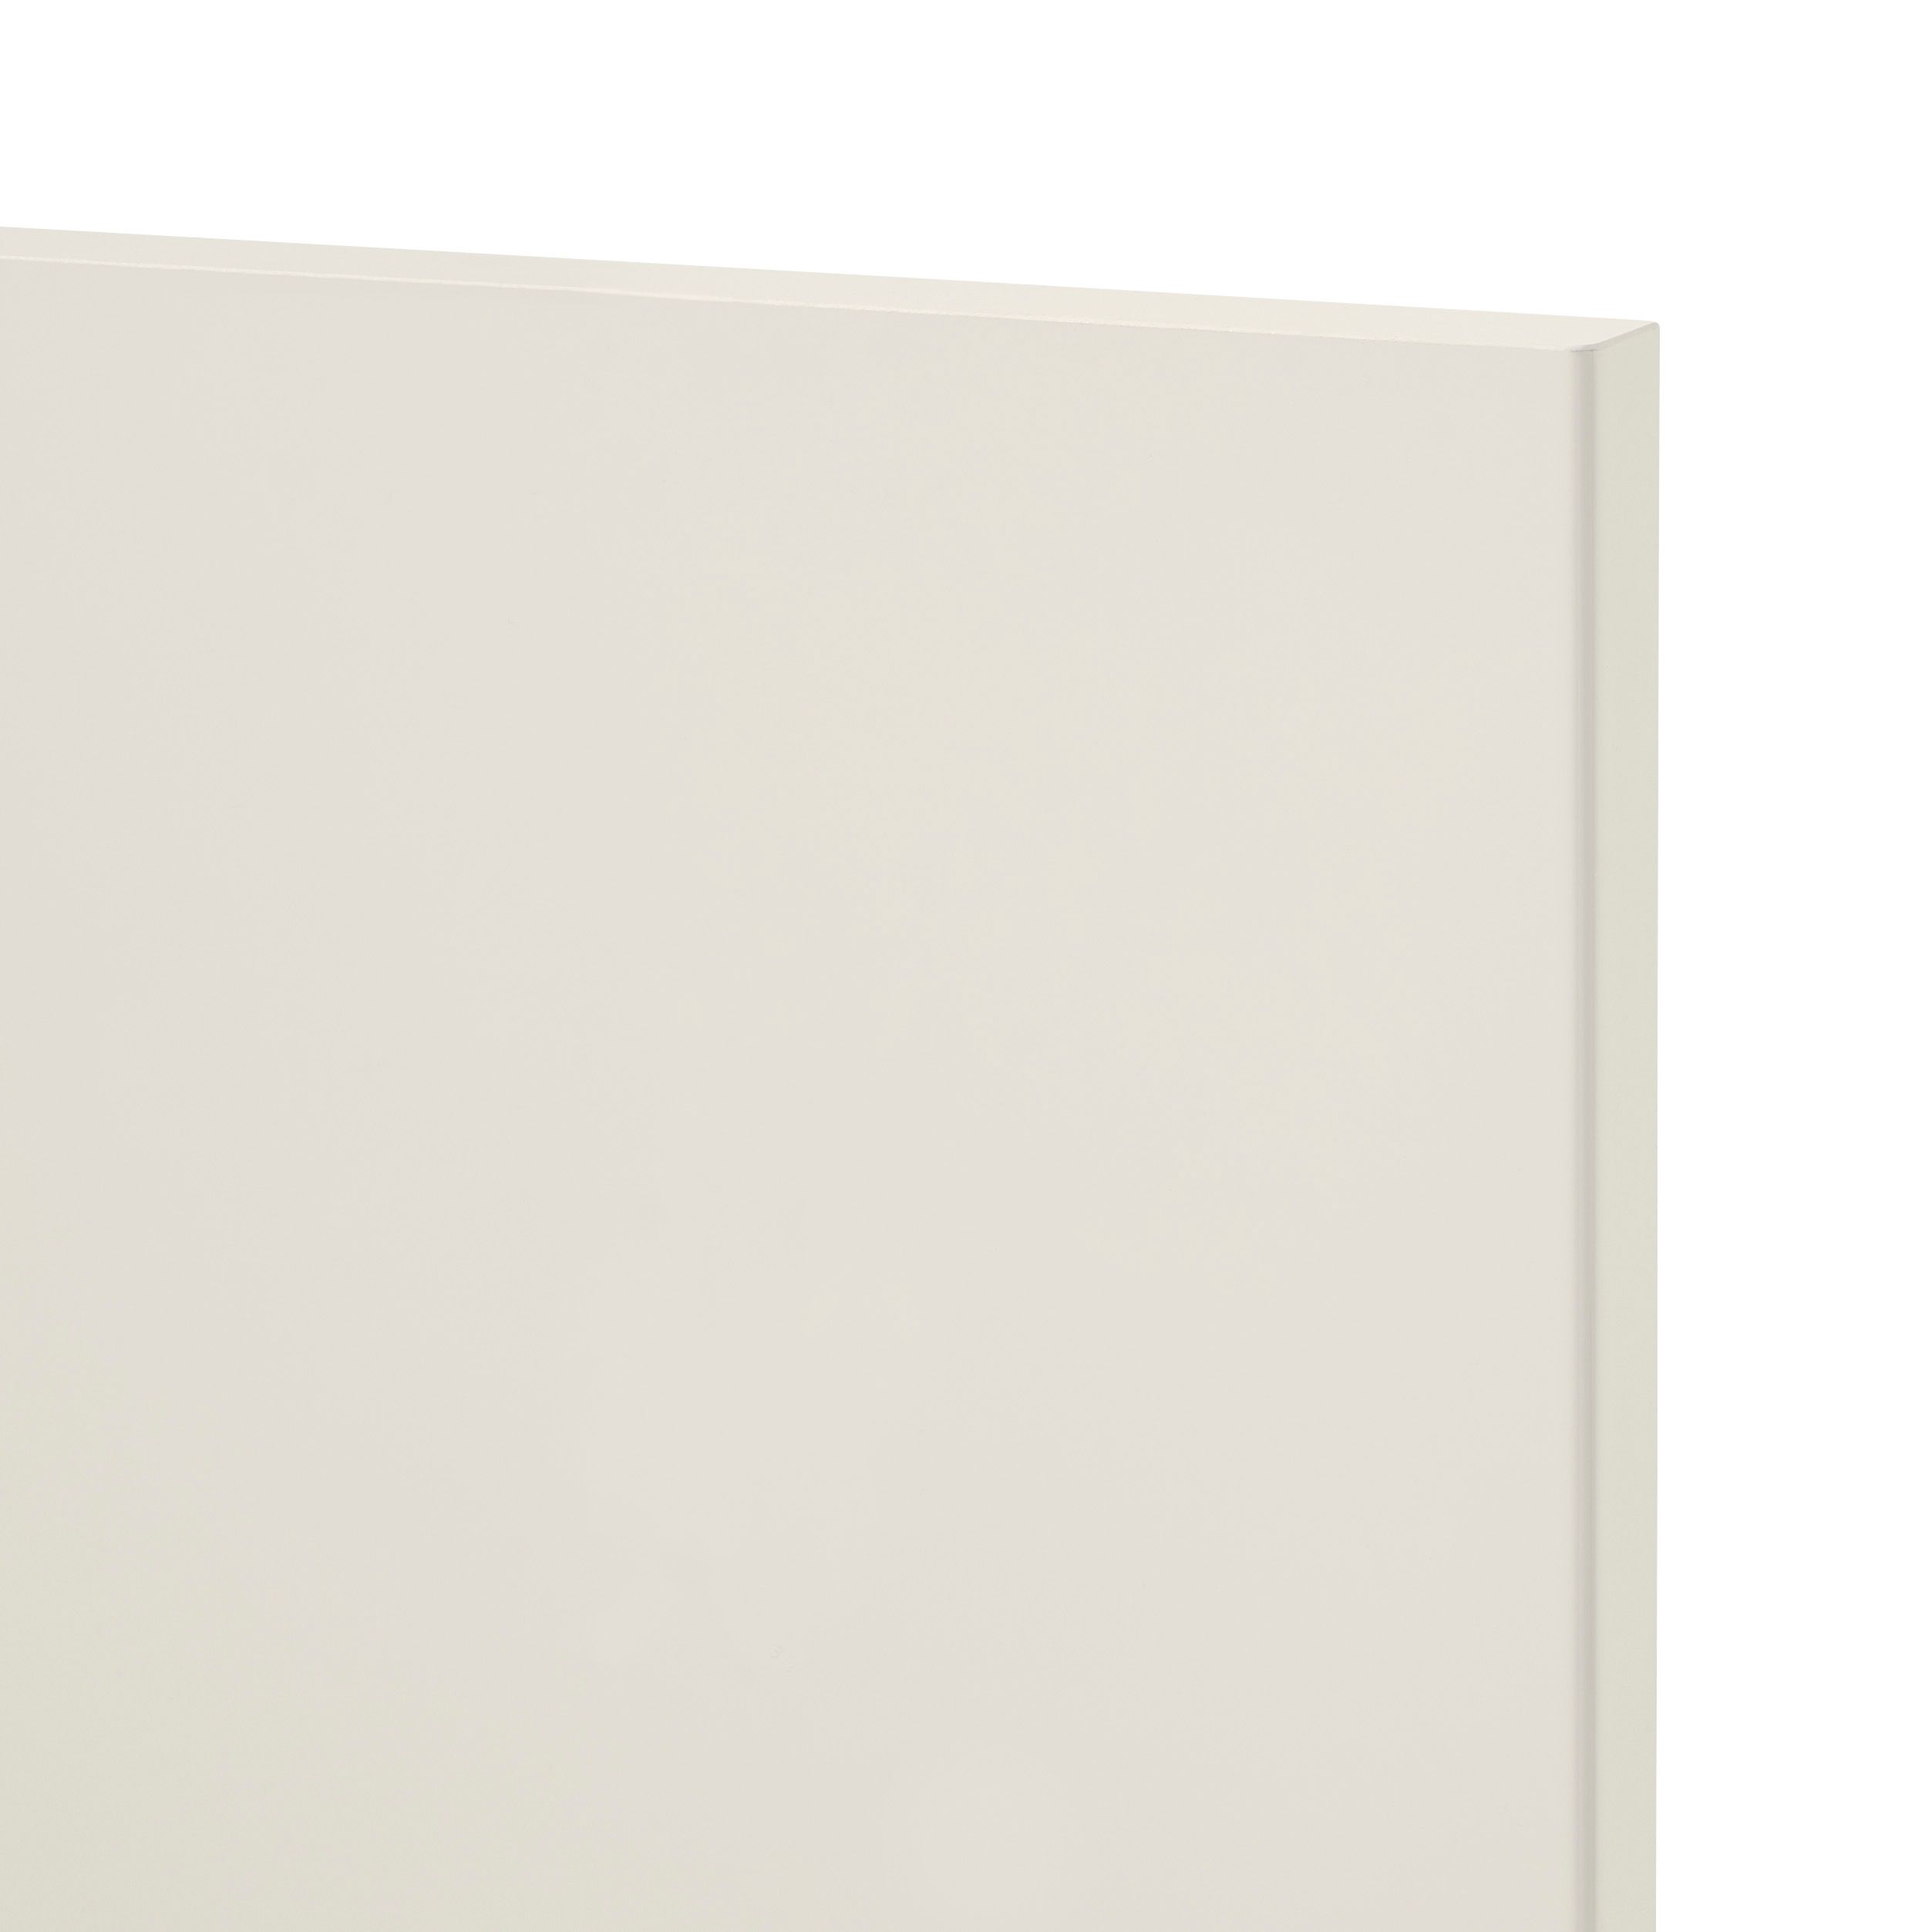 GoodHome Stevia Gloss cream slab Appliance Cabinet door (W)600mm (H)626mm (T)18mm